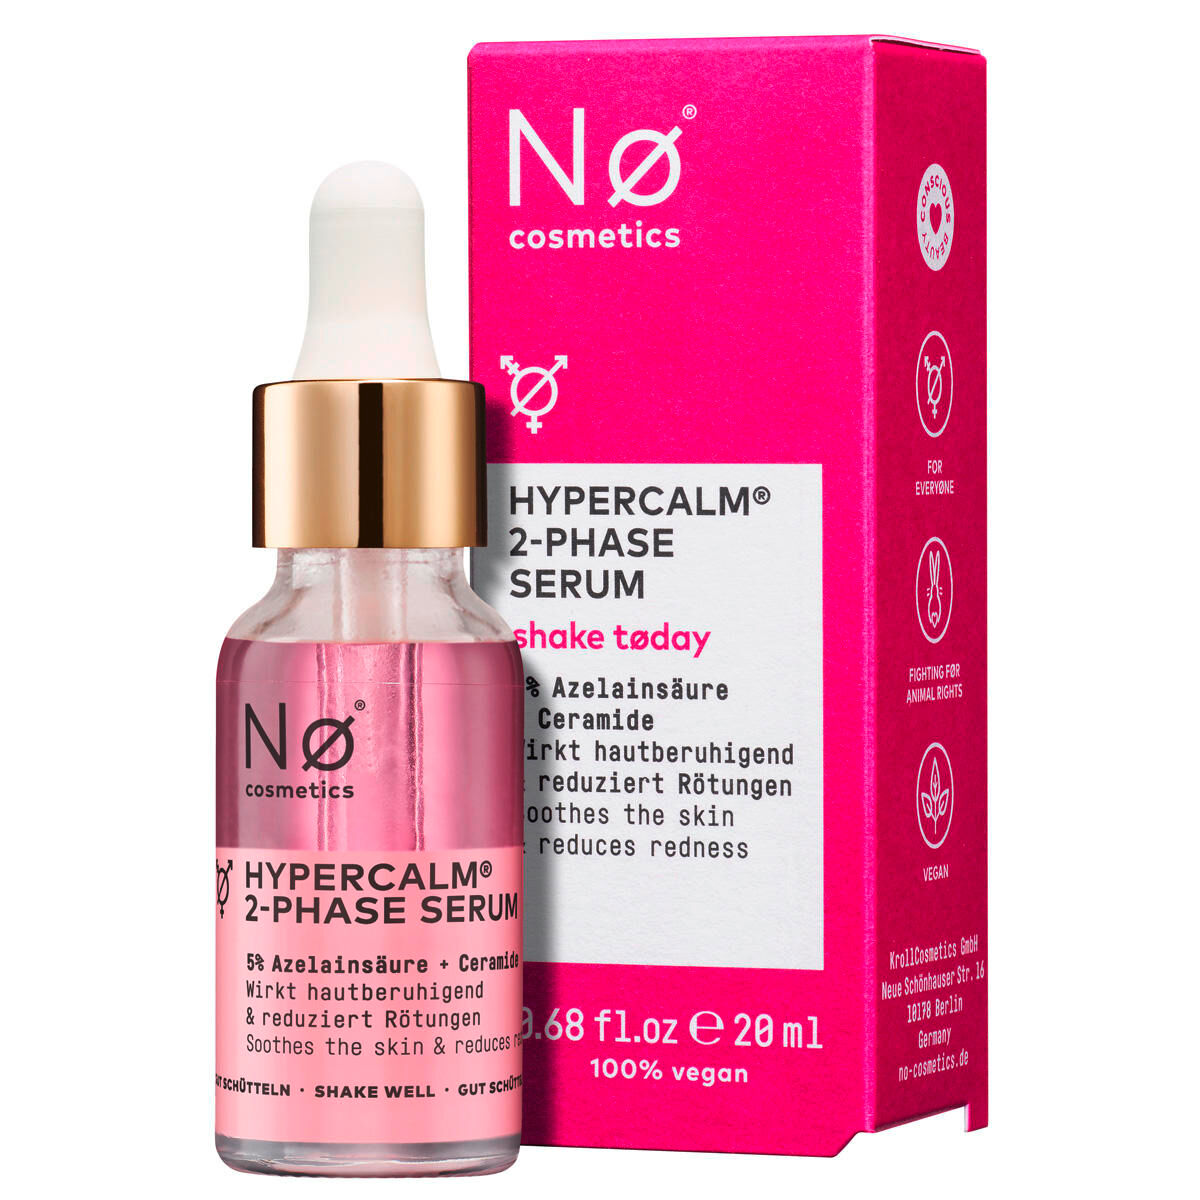 nø cosmetics shake tøday hypercalm 2-phase serum 20 ml